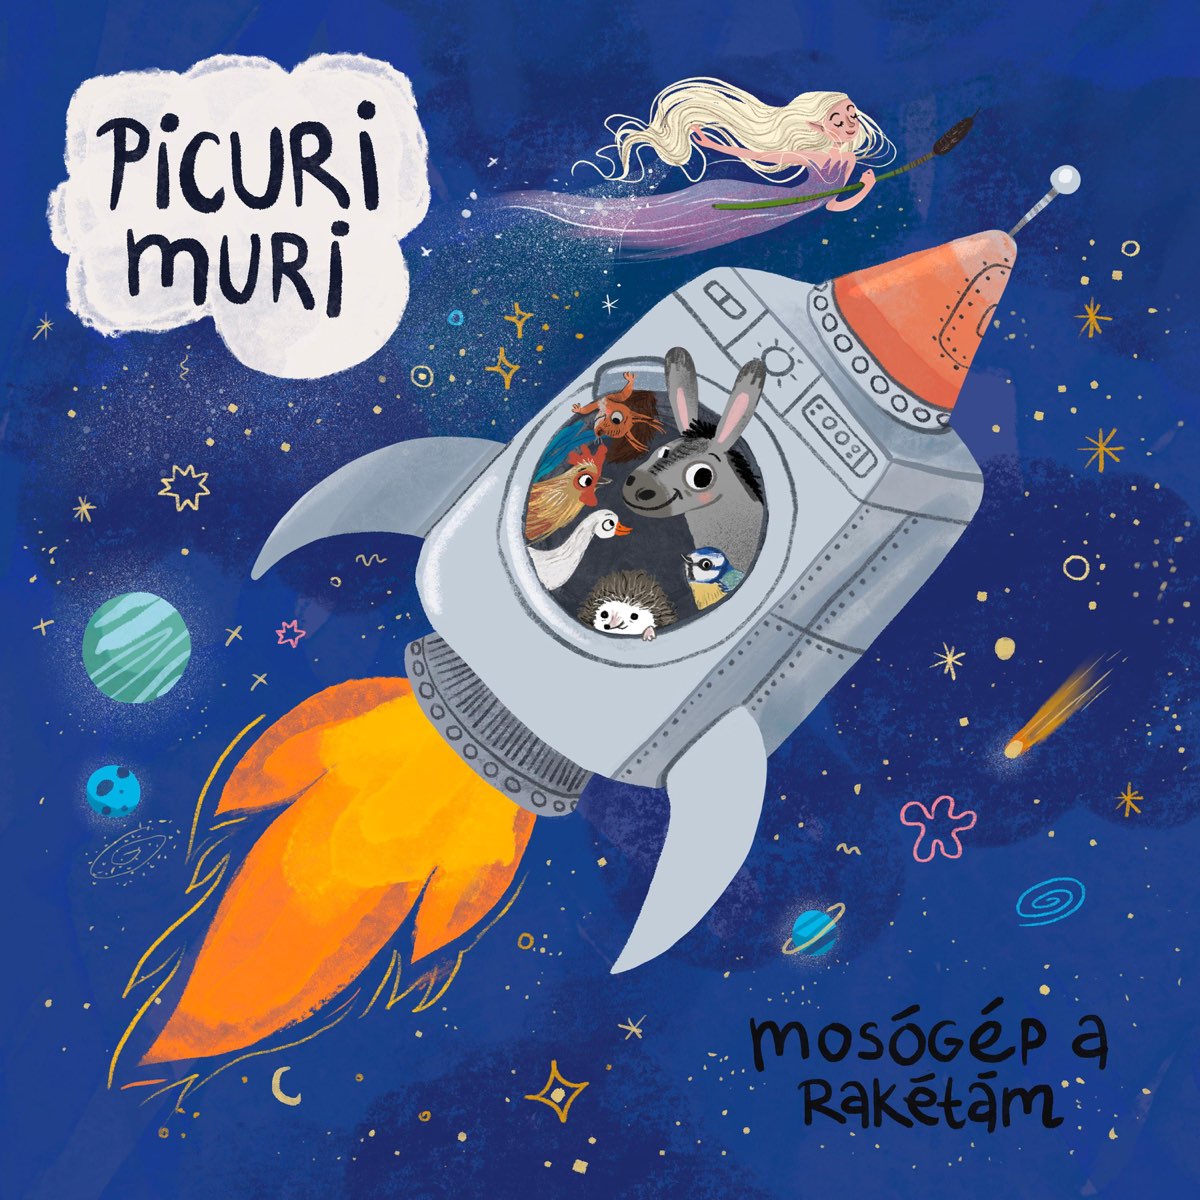 Mosógép a Rakétám - Album by Picuri Muri - Apple Music